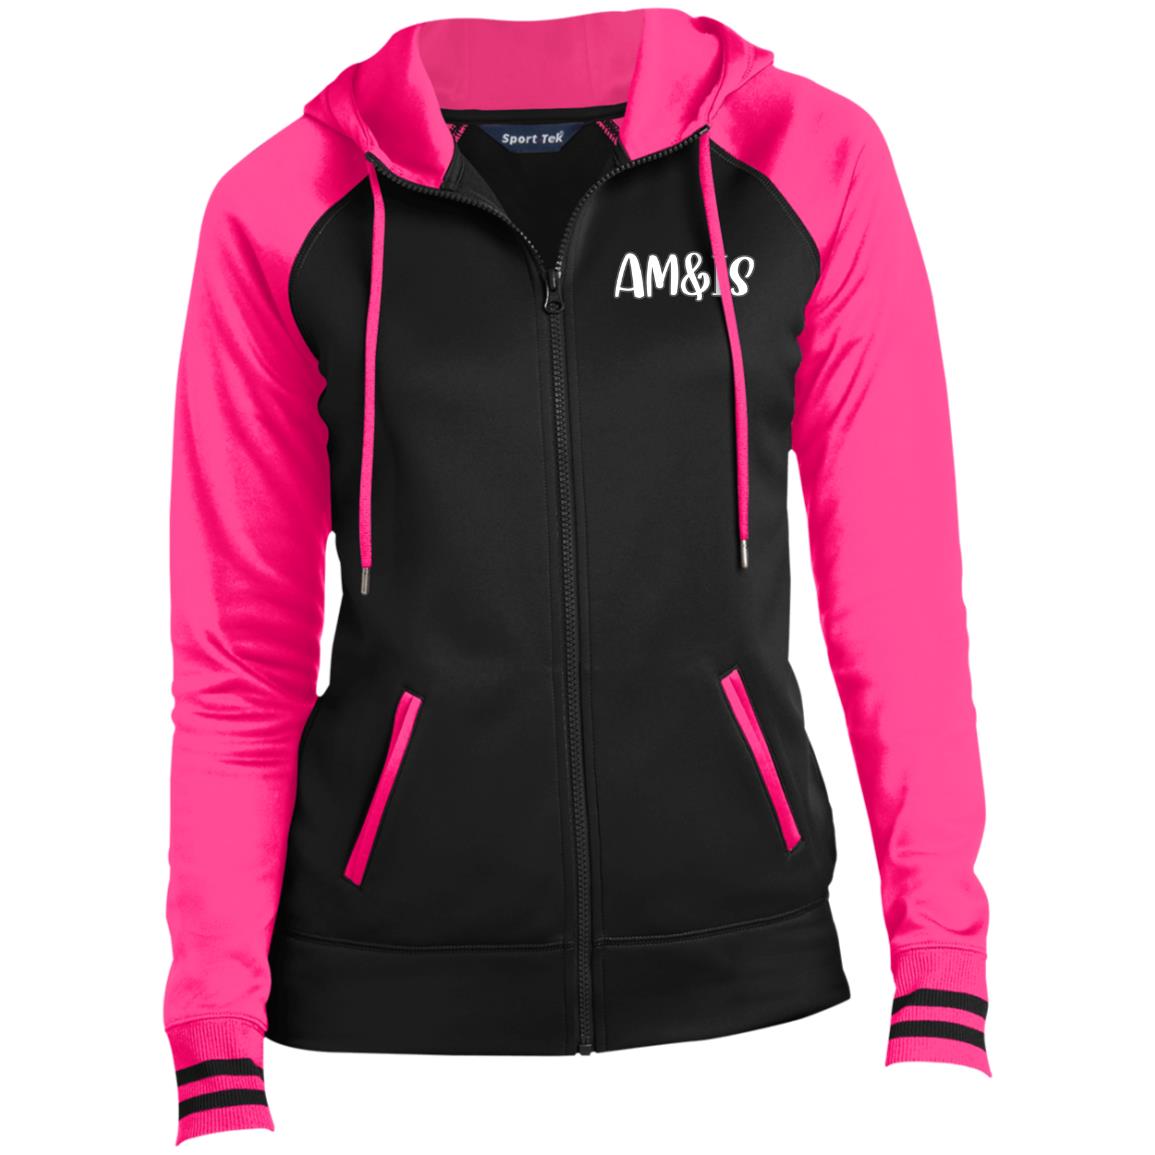 BLACK NEON PINK - AM&IS Activewear Ladies' Sport-Wick® Full-Zip Hooded Jacket - womens jacket at TFC&H Co.